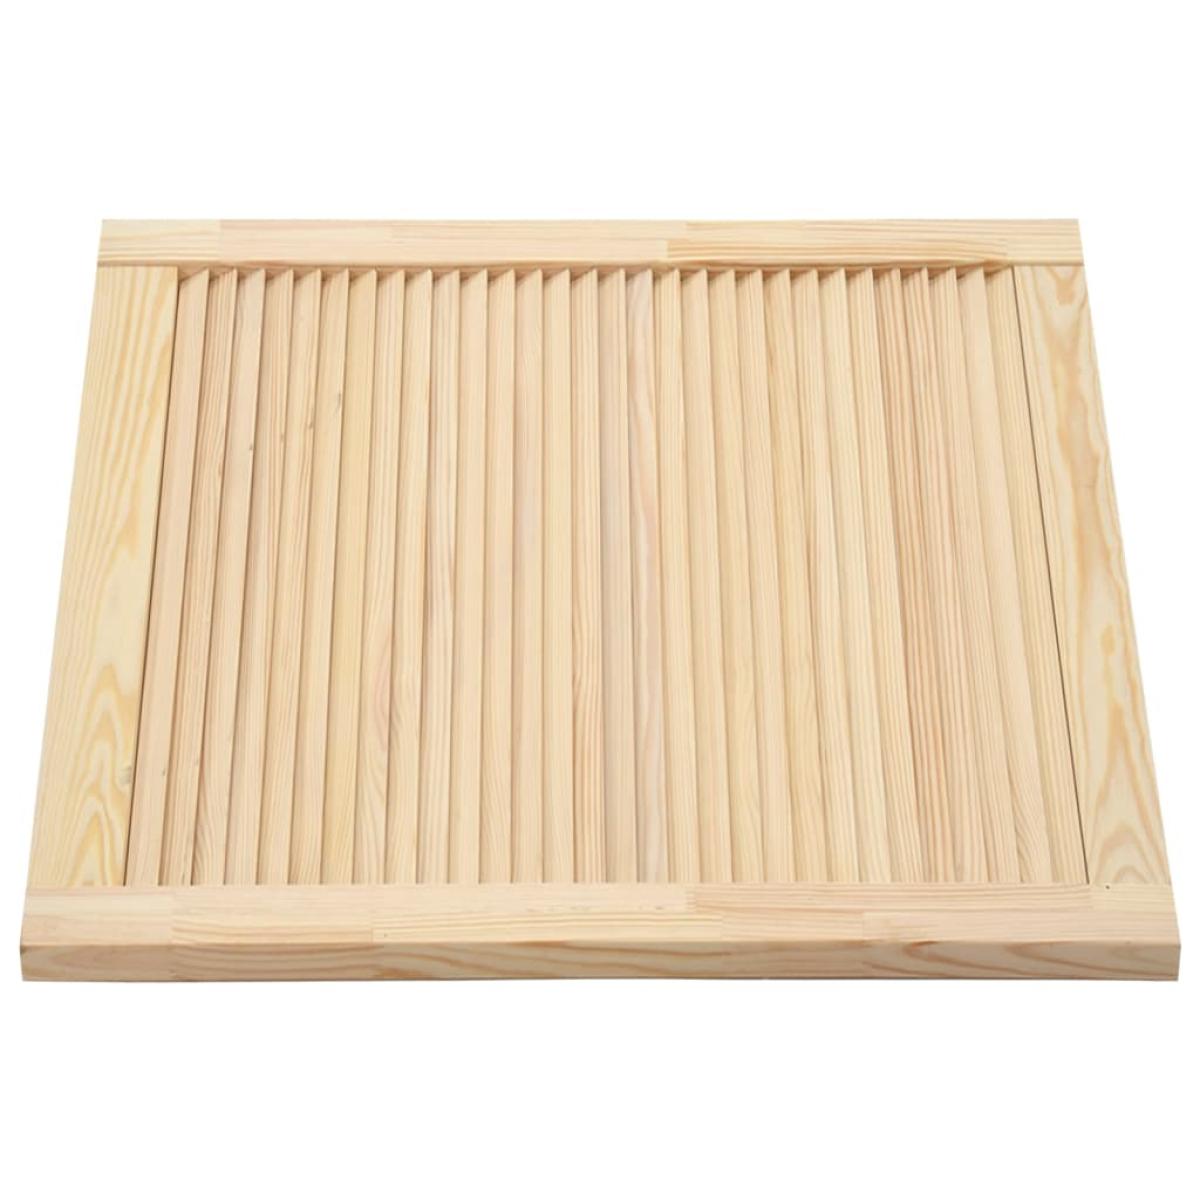 Puertas tipo persiana 2 uds madera maciza de pino 39,5x49,4cm